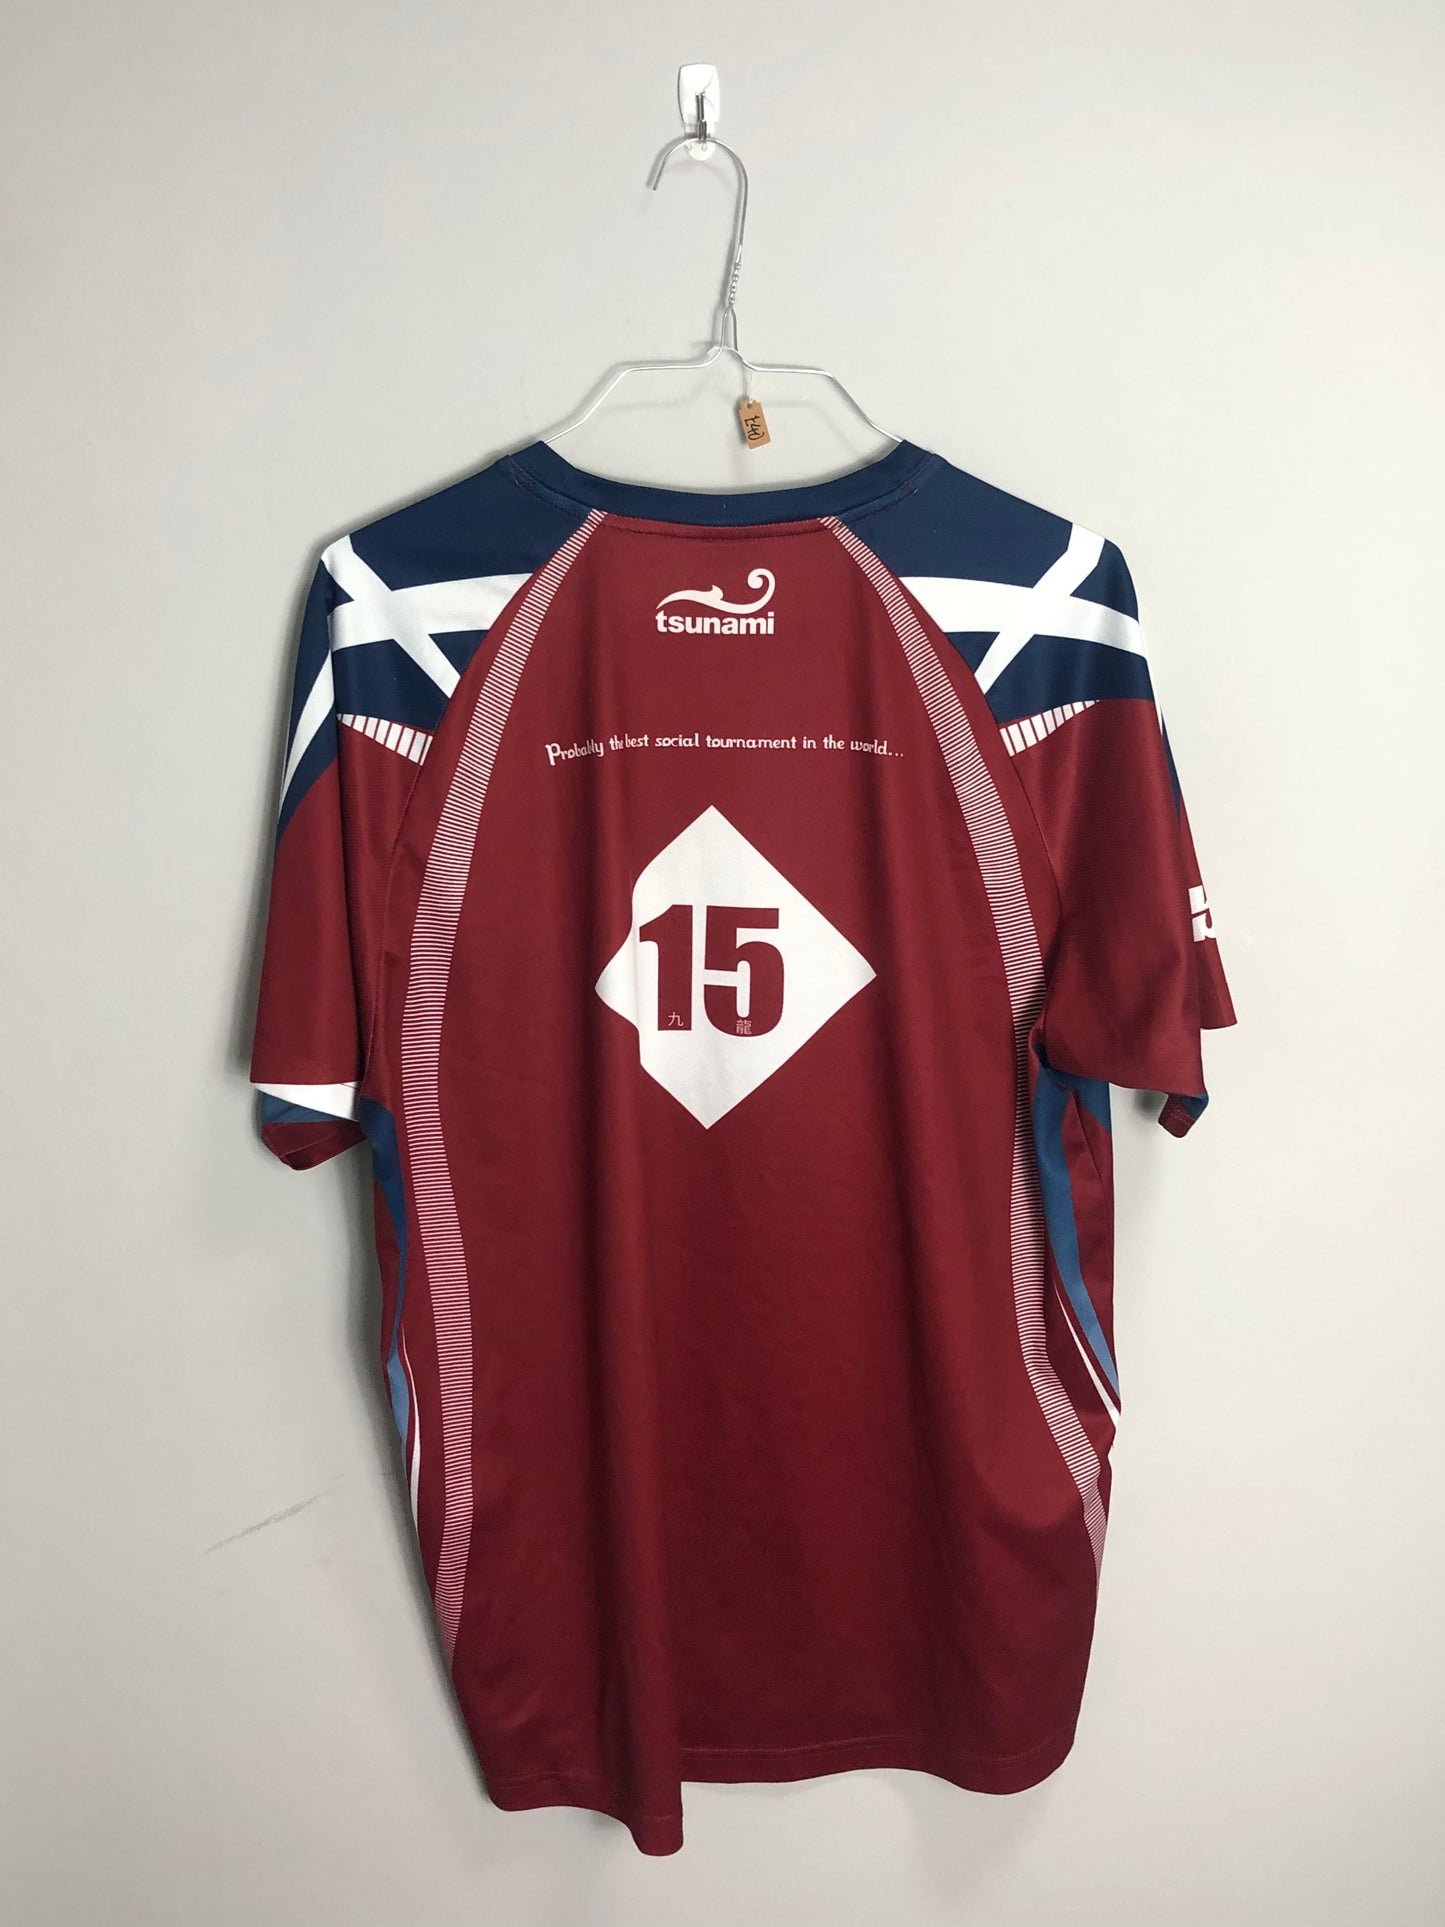 Kowloon Rugby Match Worn Shirt - #15 - 44” Chest